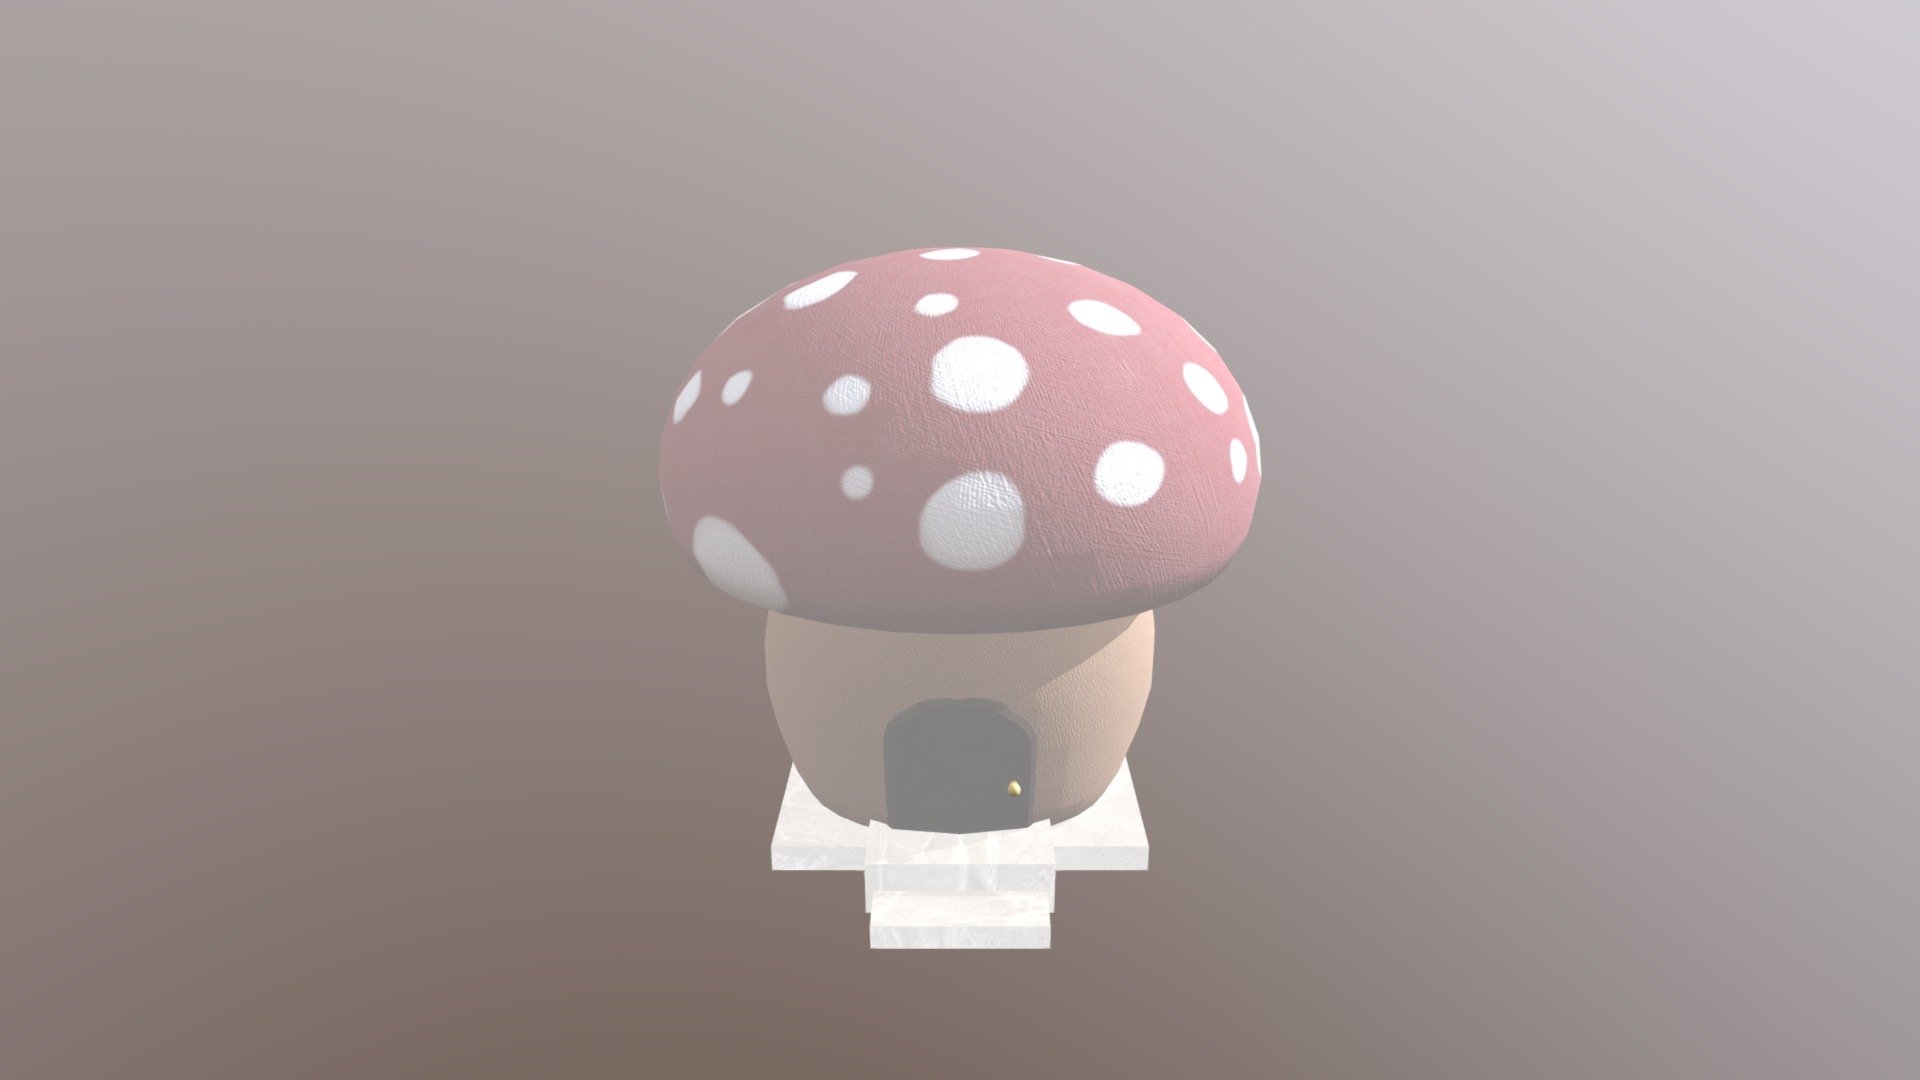 rhhhhhh - Mushroom House Export 03 - 3D model by kaylastenzel 3d model